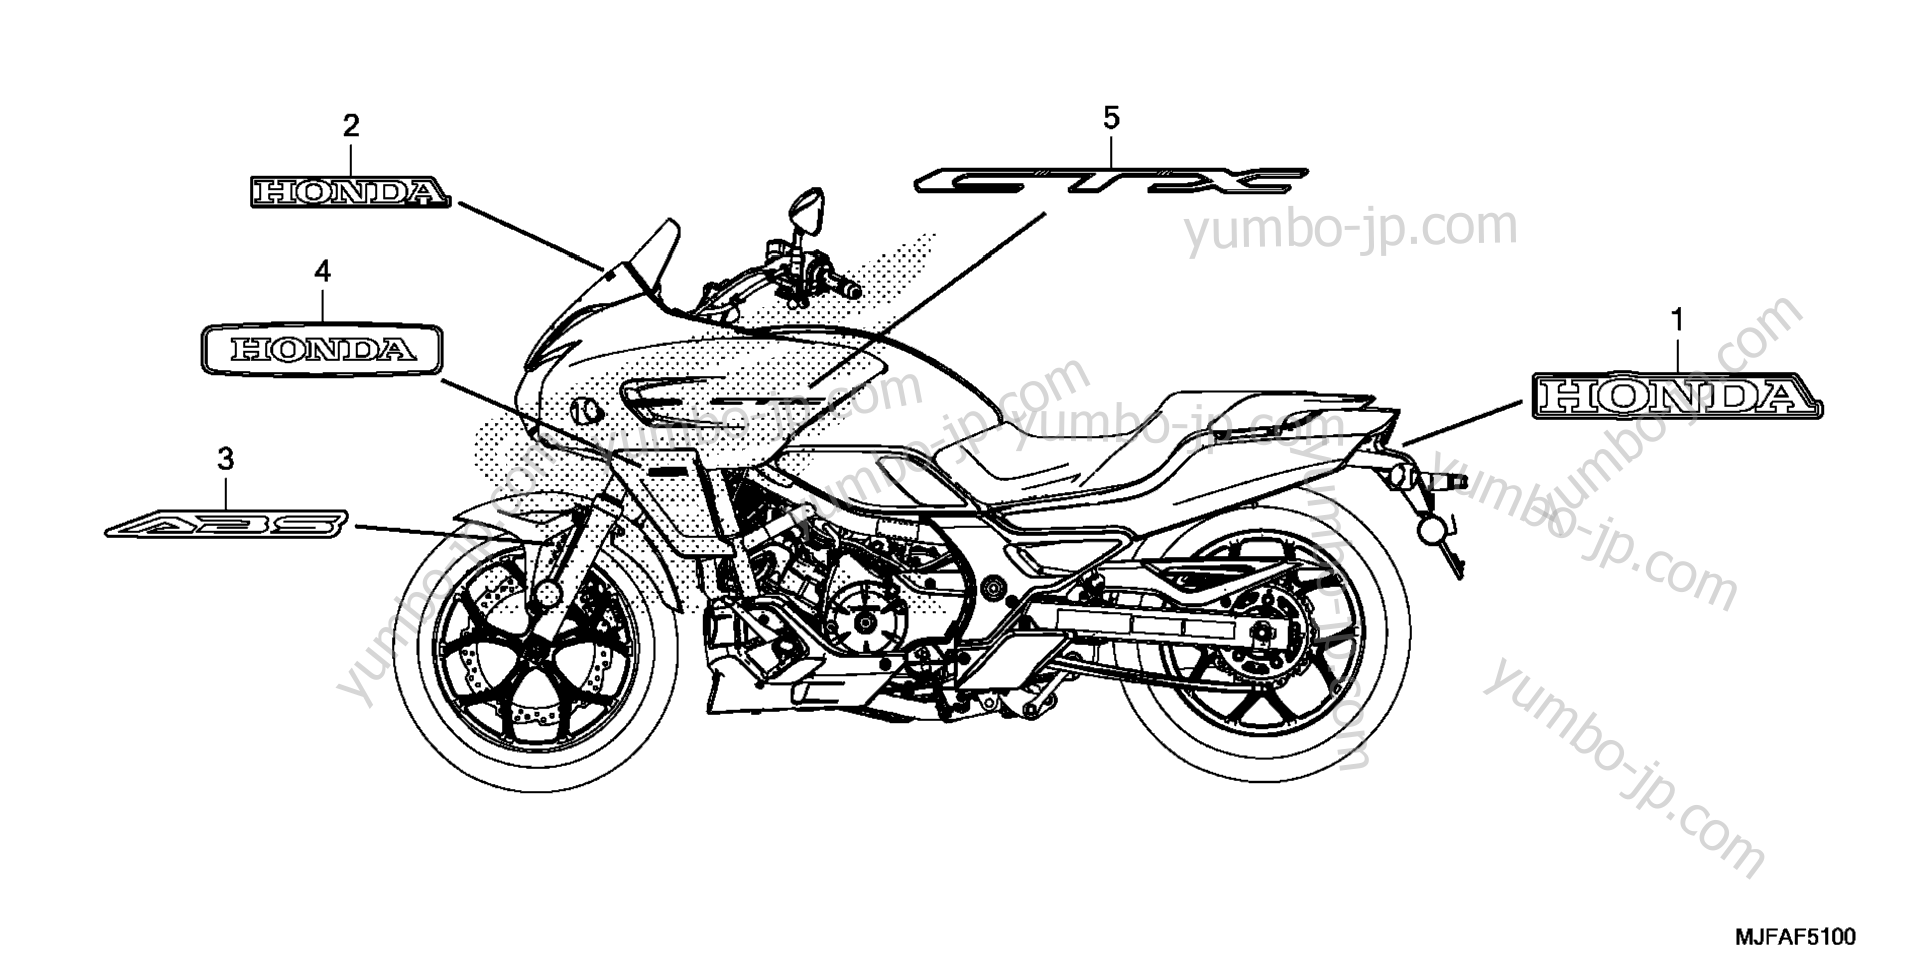 MARK / EMBLEM for motorcycles HONDA CTX700 AC 2014 year